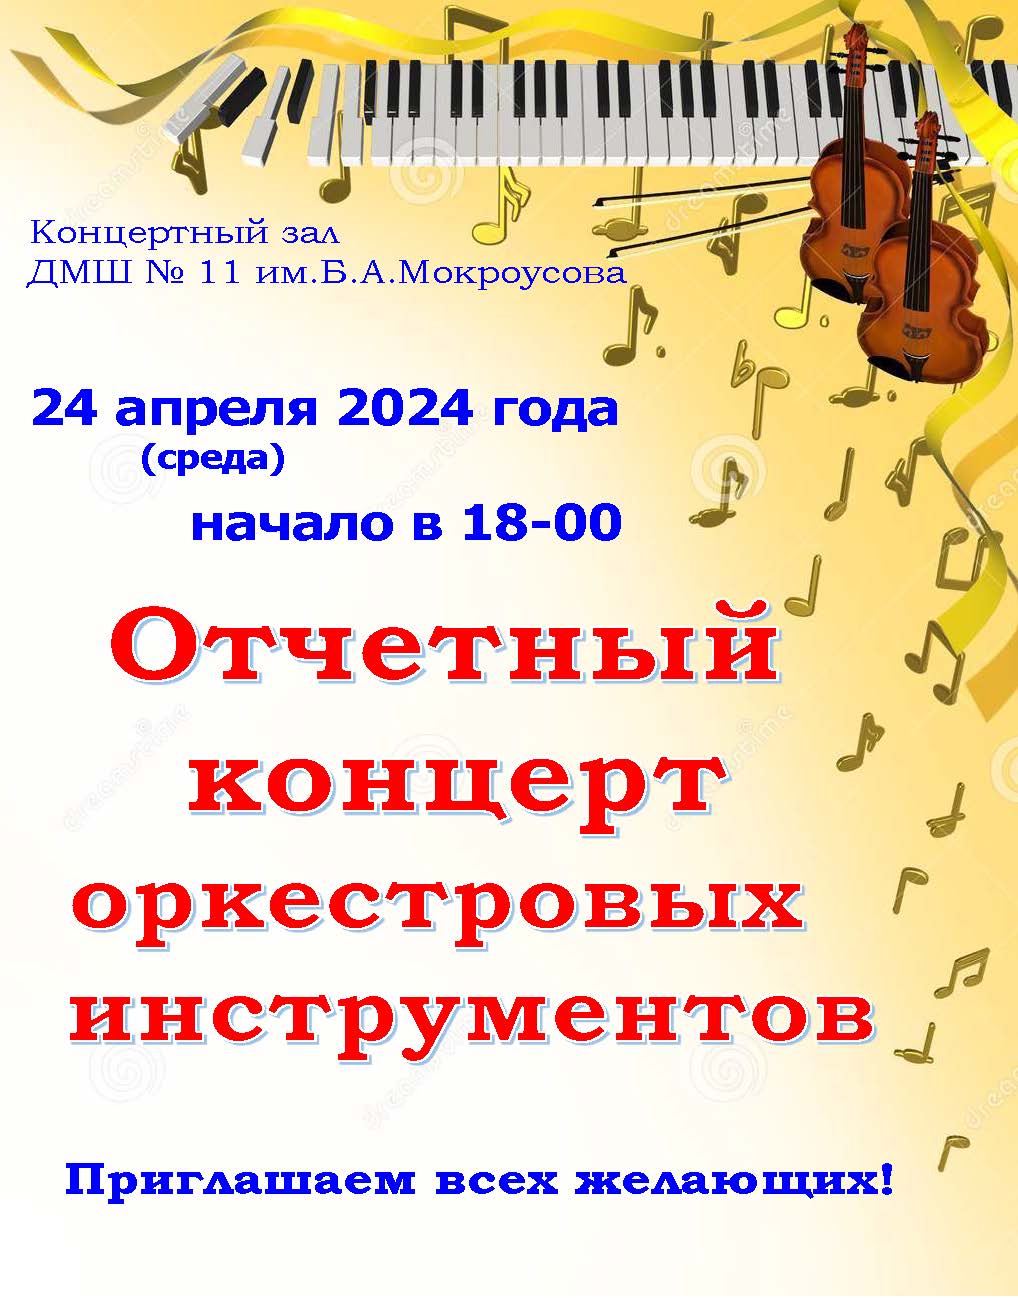 Отчетный концерт ОРКЕСТР ОТД апр 2024